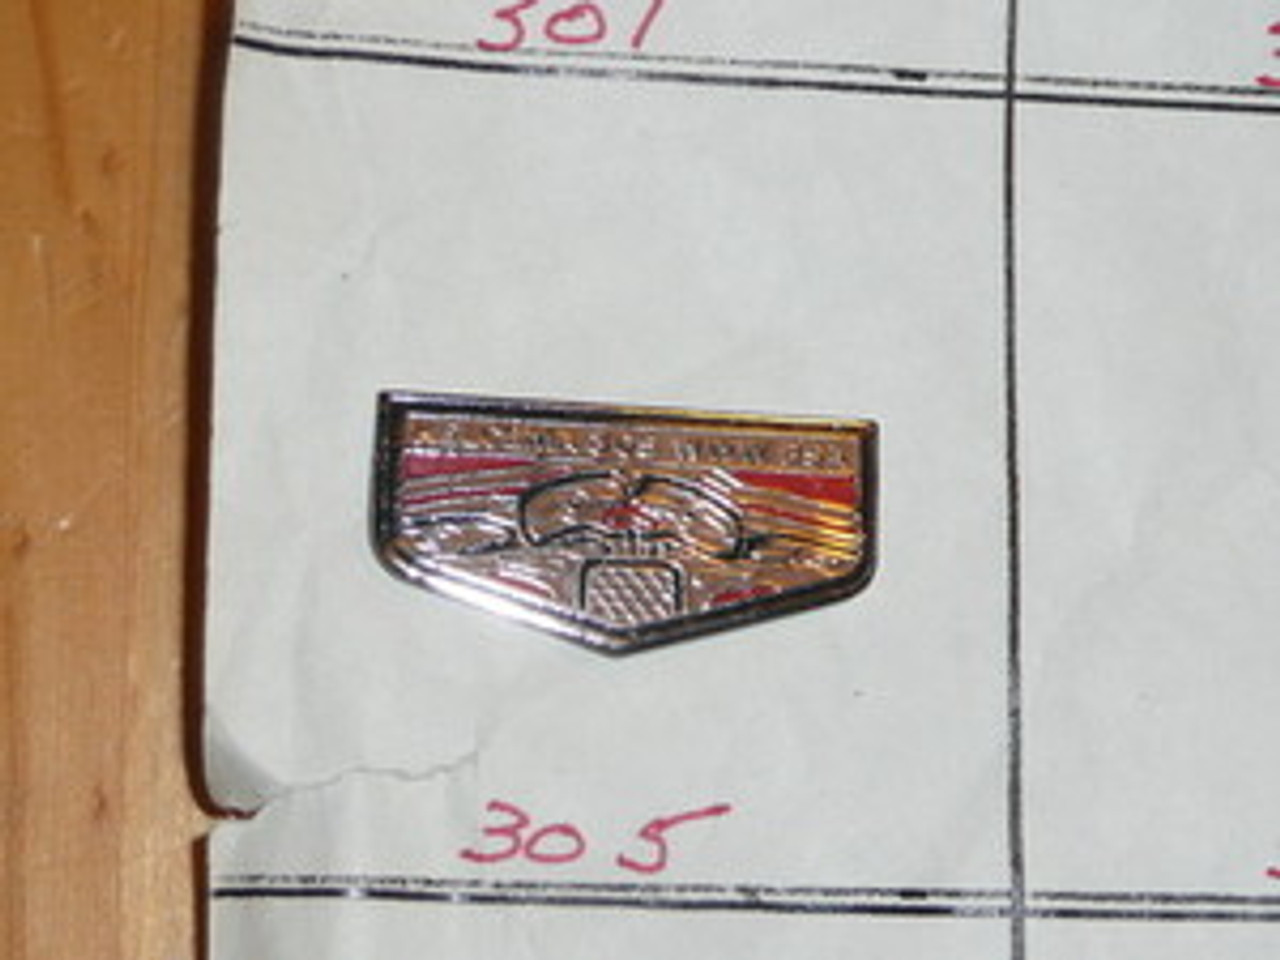 Kelcema O.A. Lodge #305 Flap Shaped Pin - Scout